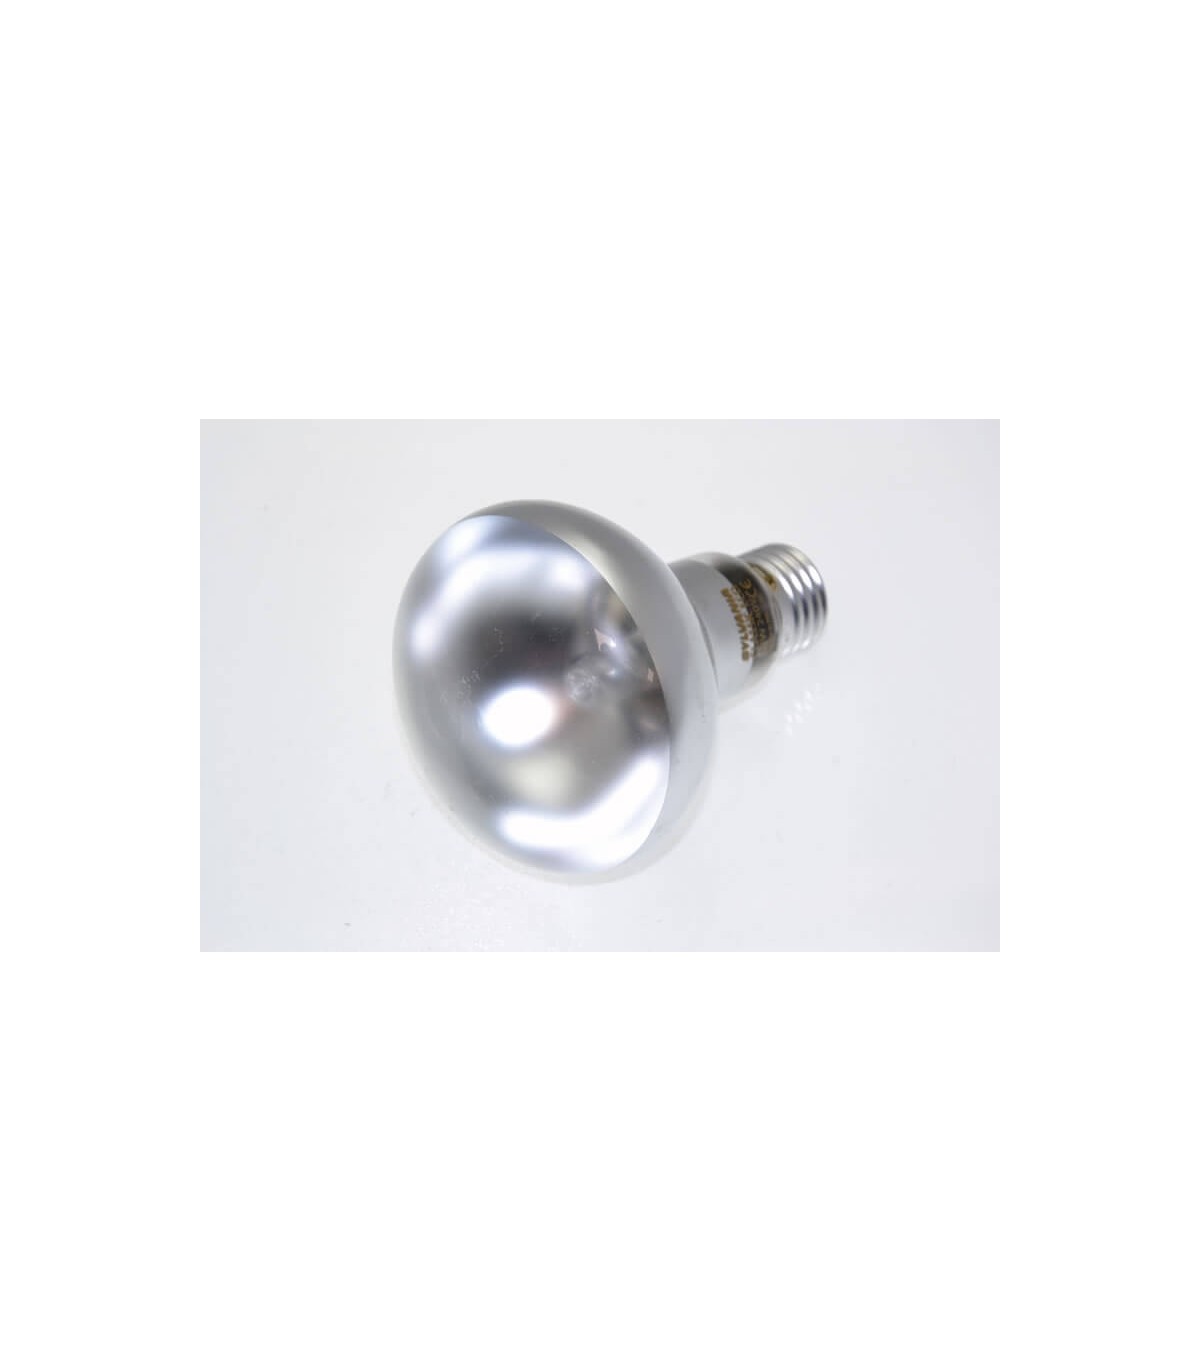 Ampoule Halogene JDD E27 250w 230v Dimmable verre transparent